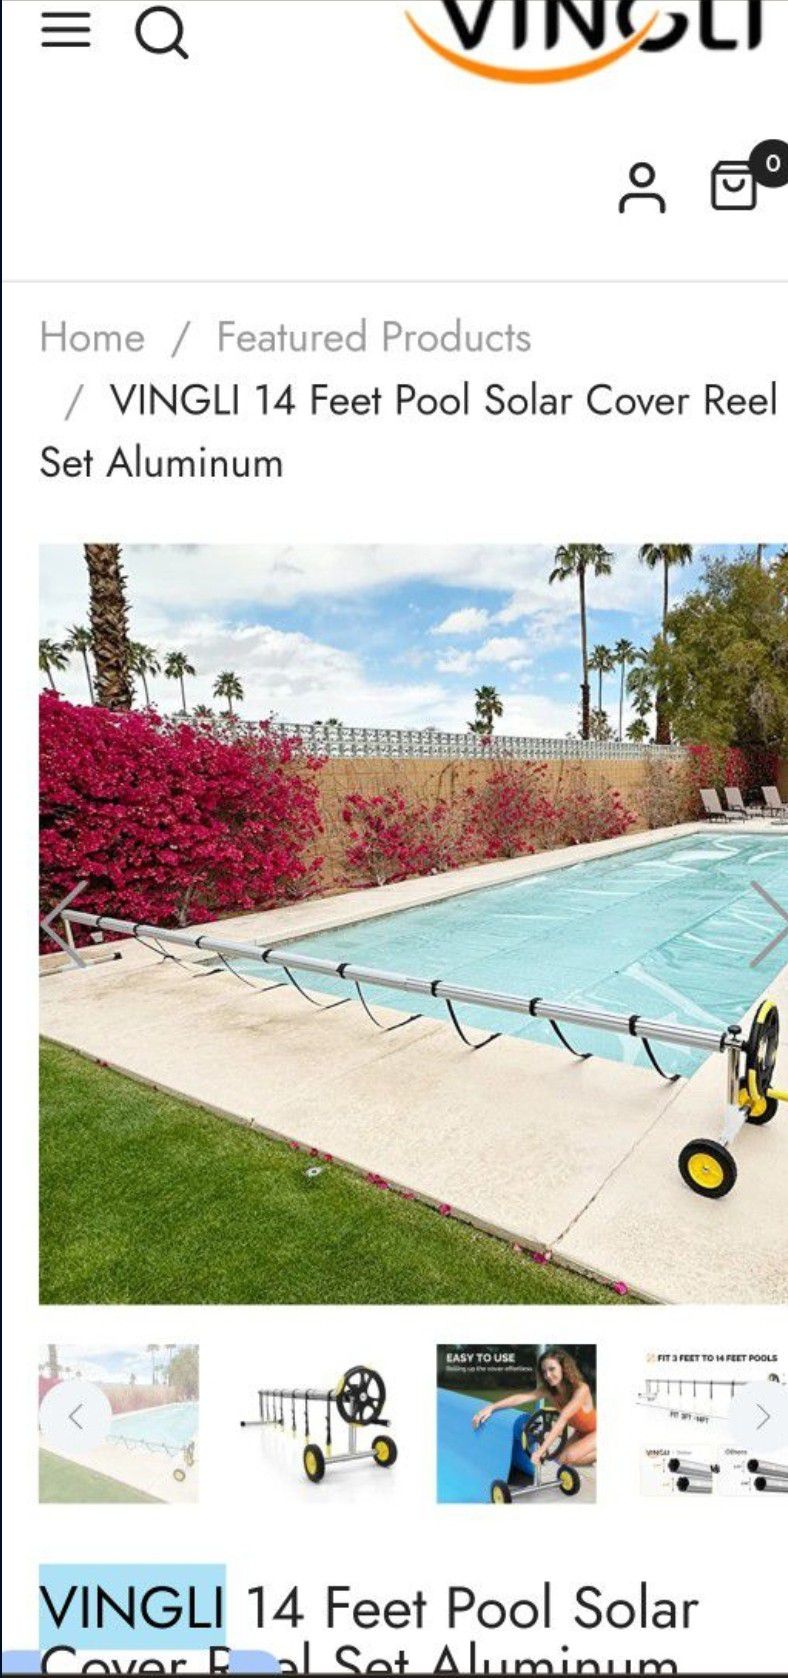 VINGLI 14 Feet Pool Solar Cover Reel Set Aluminum COVER NOT